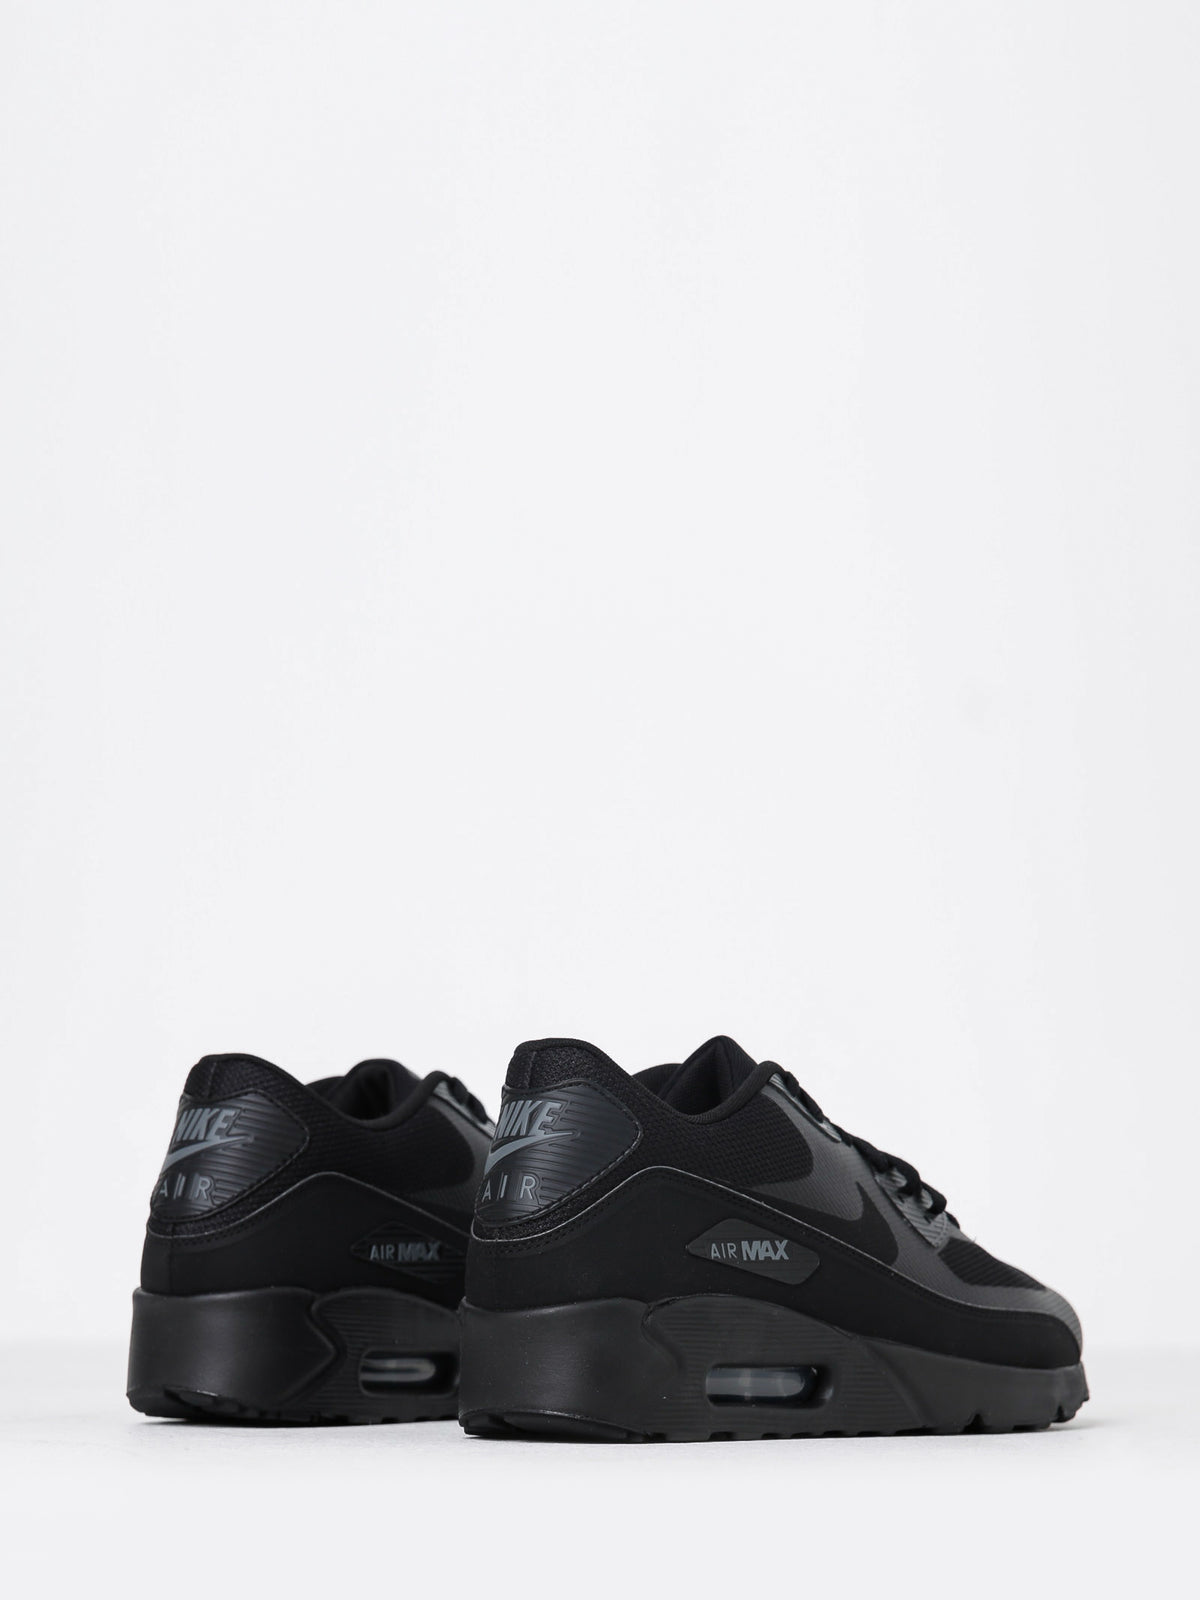 Mens Air Max 90 Ultra 2.0 Essential Sneakers in Black